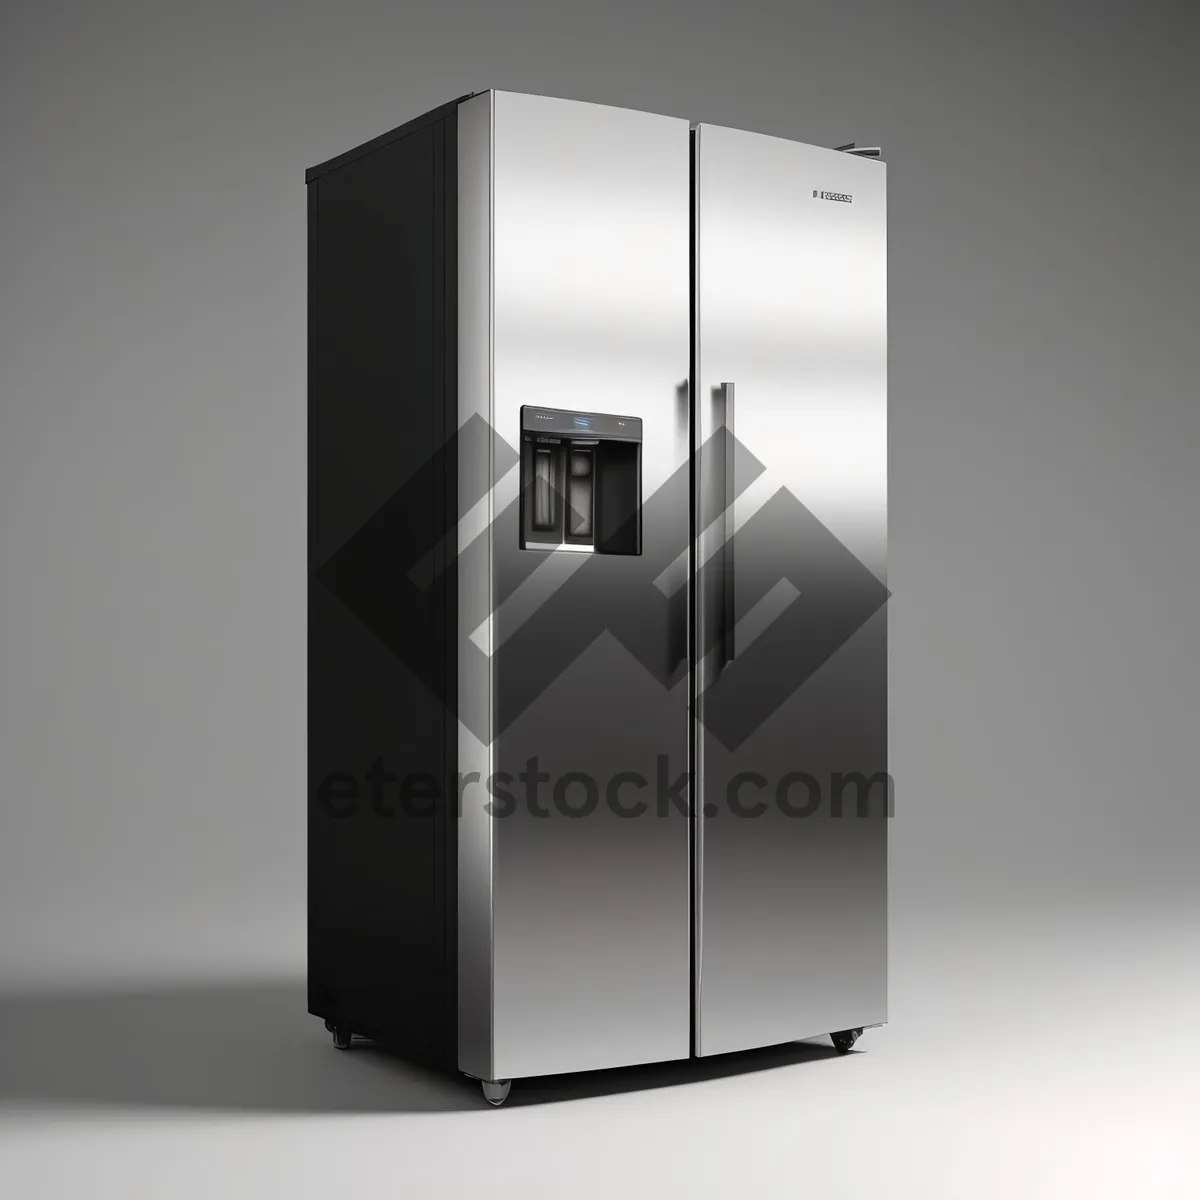 Picture of Modern 3D Render of Security System Refrigerator Door